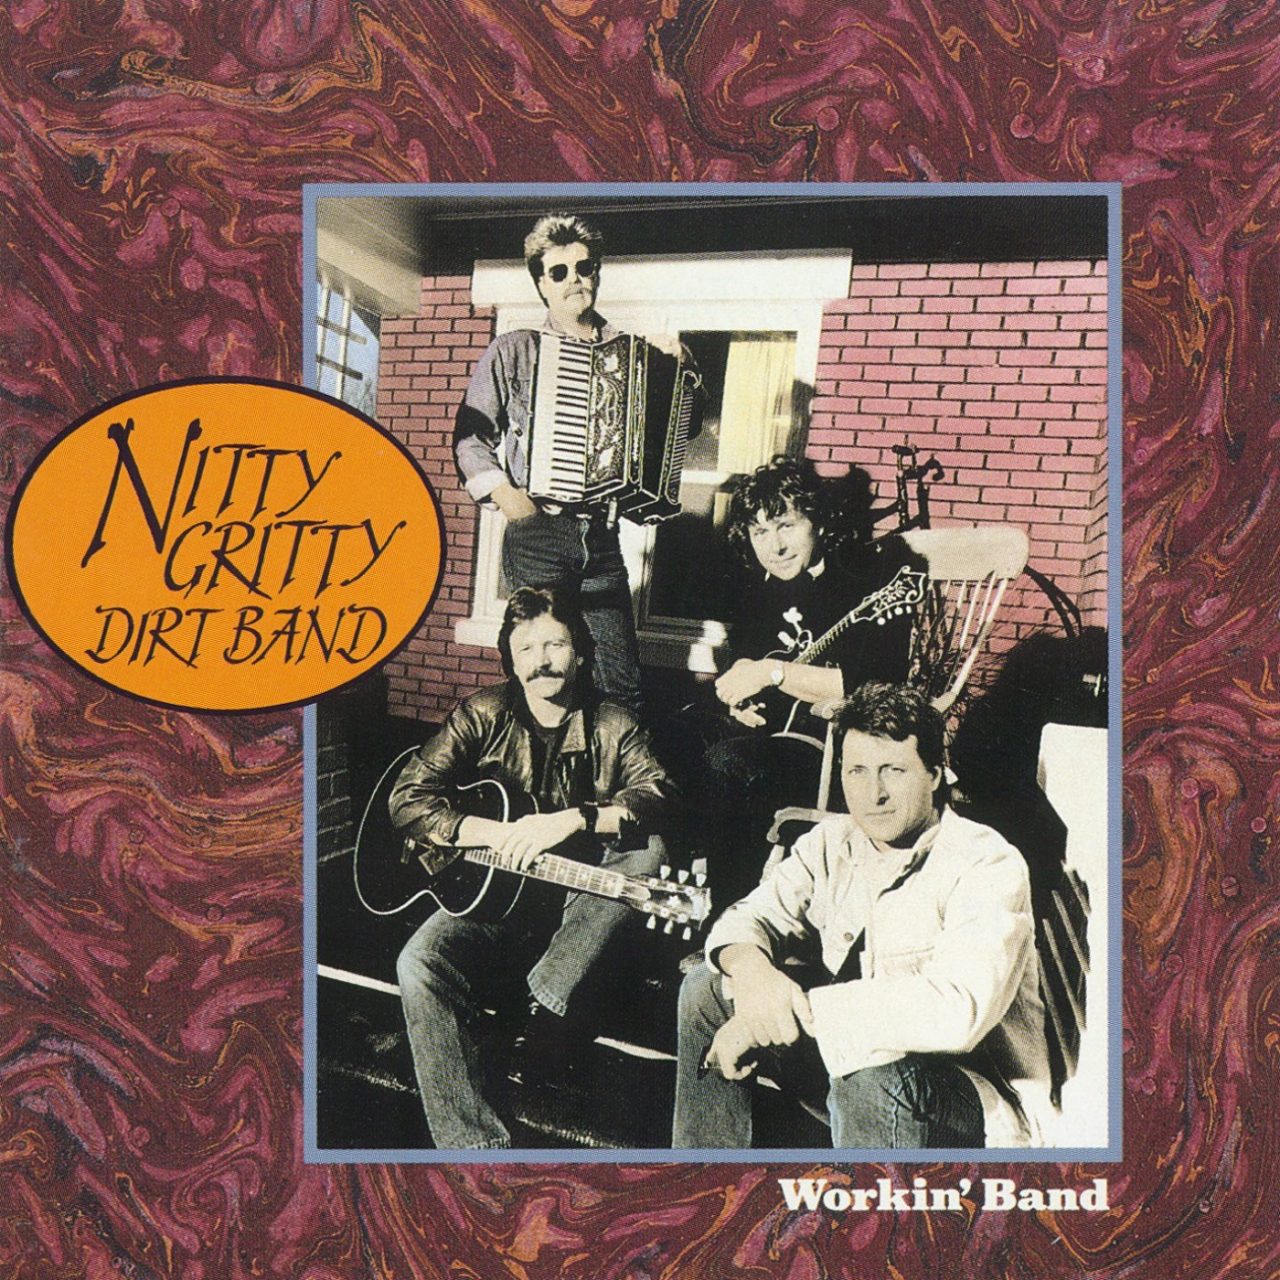 Nitty Gritty Dirt Band – Workin’ Band cover album